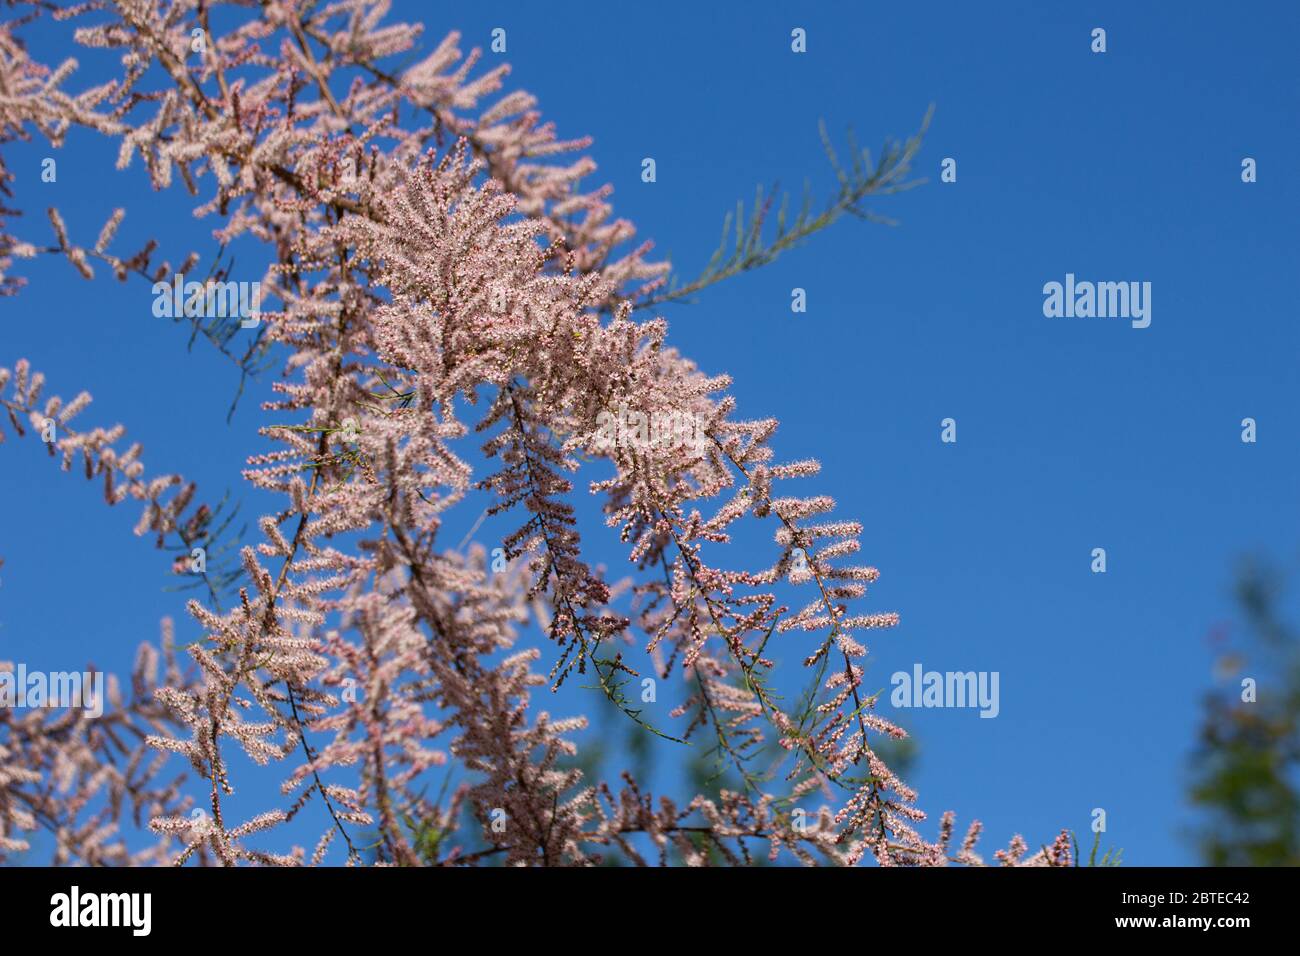 Pink flowers of a tamarisk with blue sky background, Tamarix gallica or tamariske Stock Photo